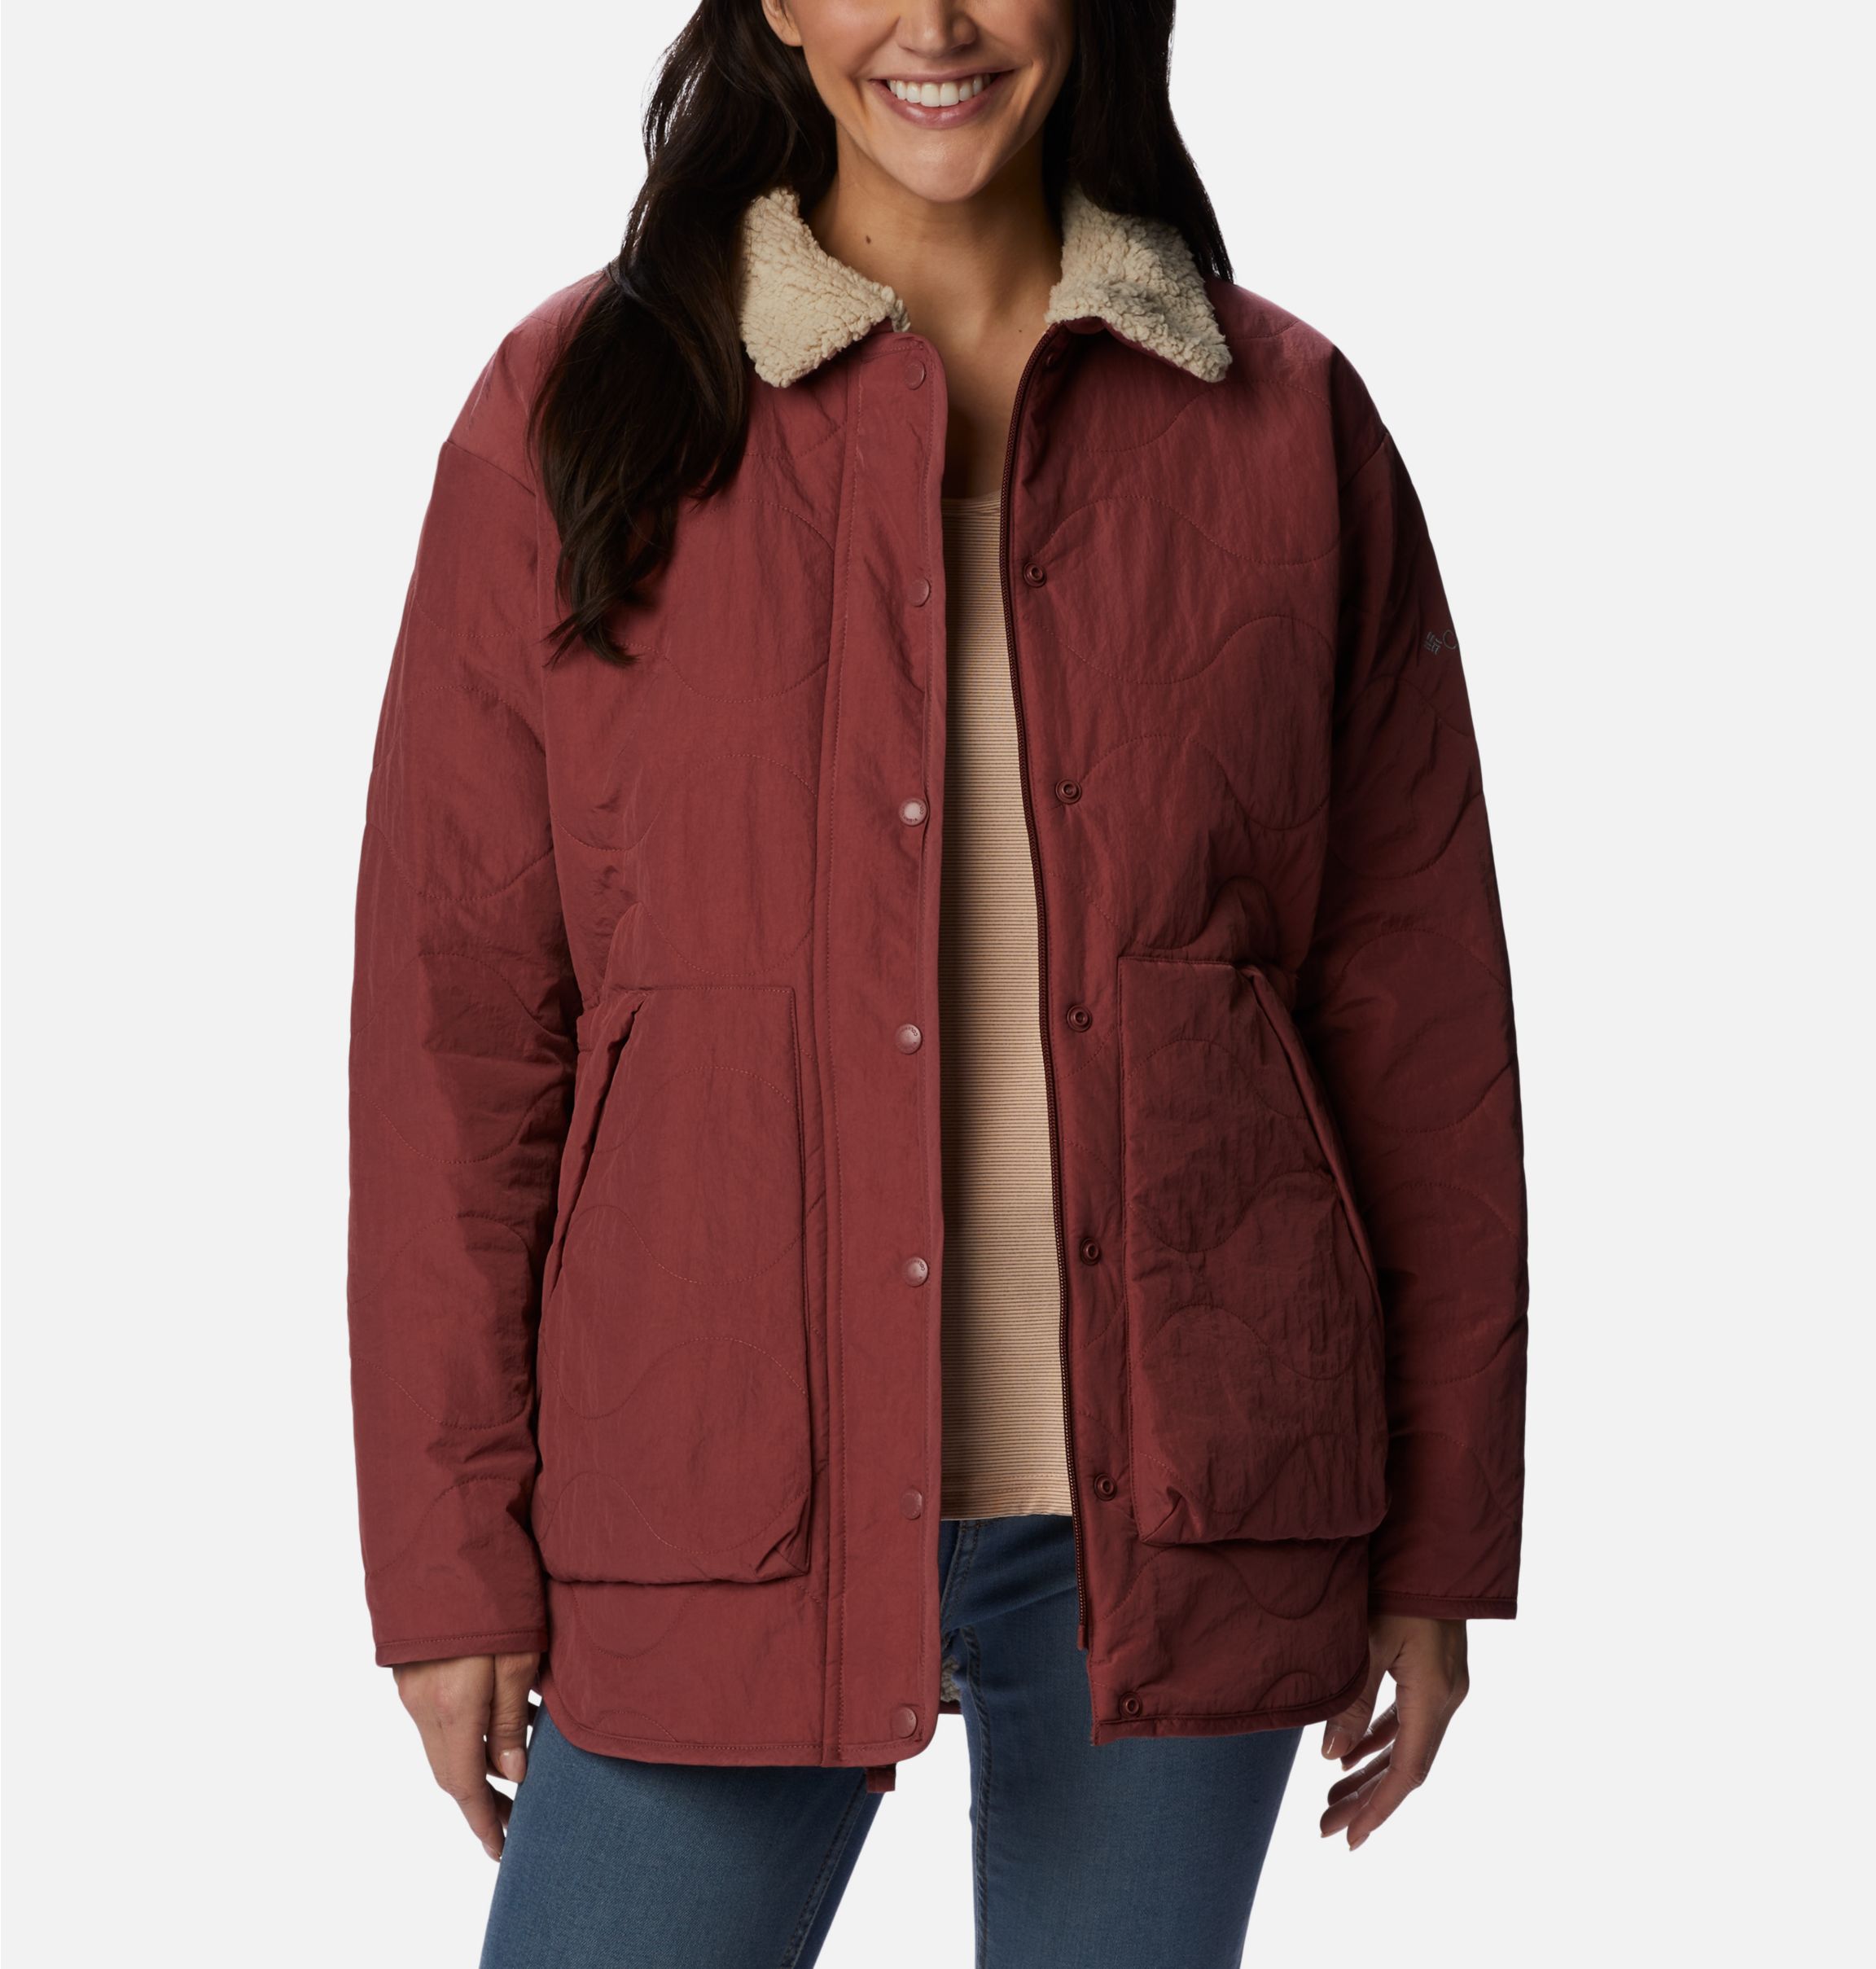 Padded Denim Jacket with Hood, Sherpa Lining, for Girls - stone, Girls